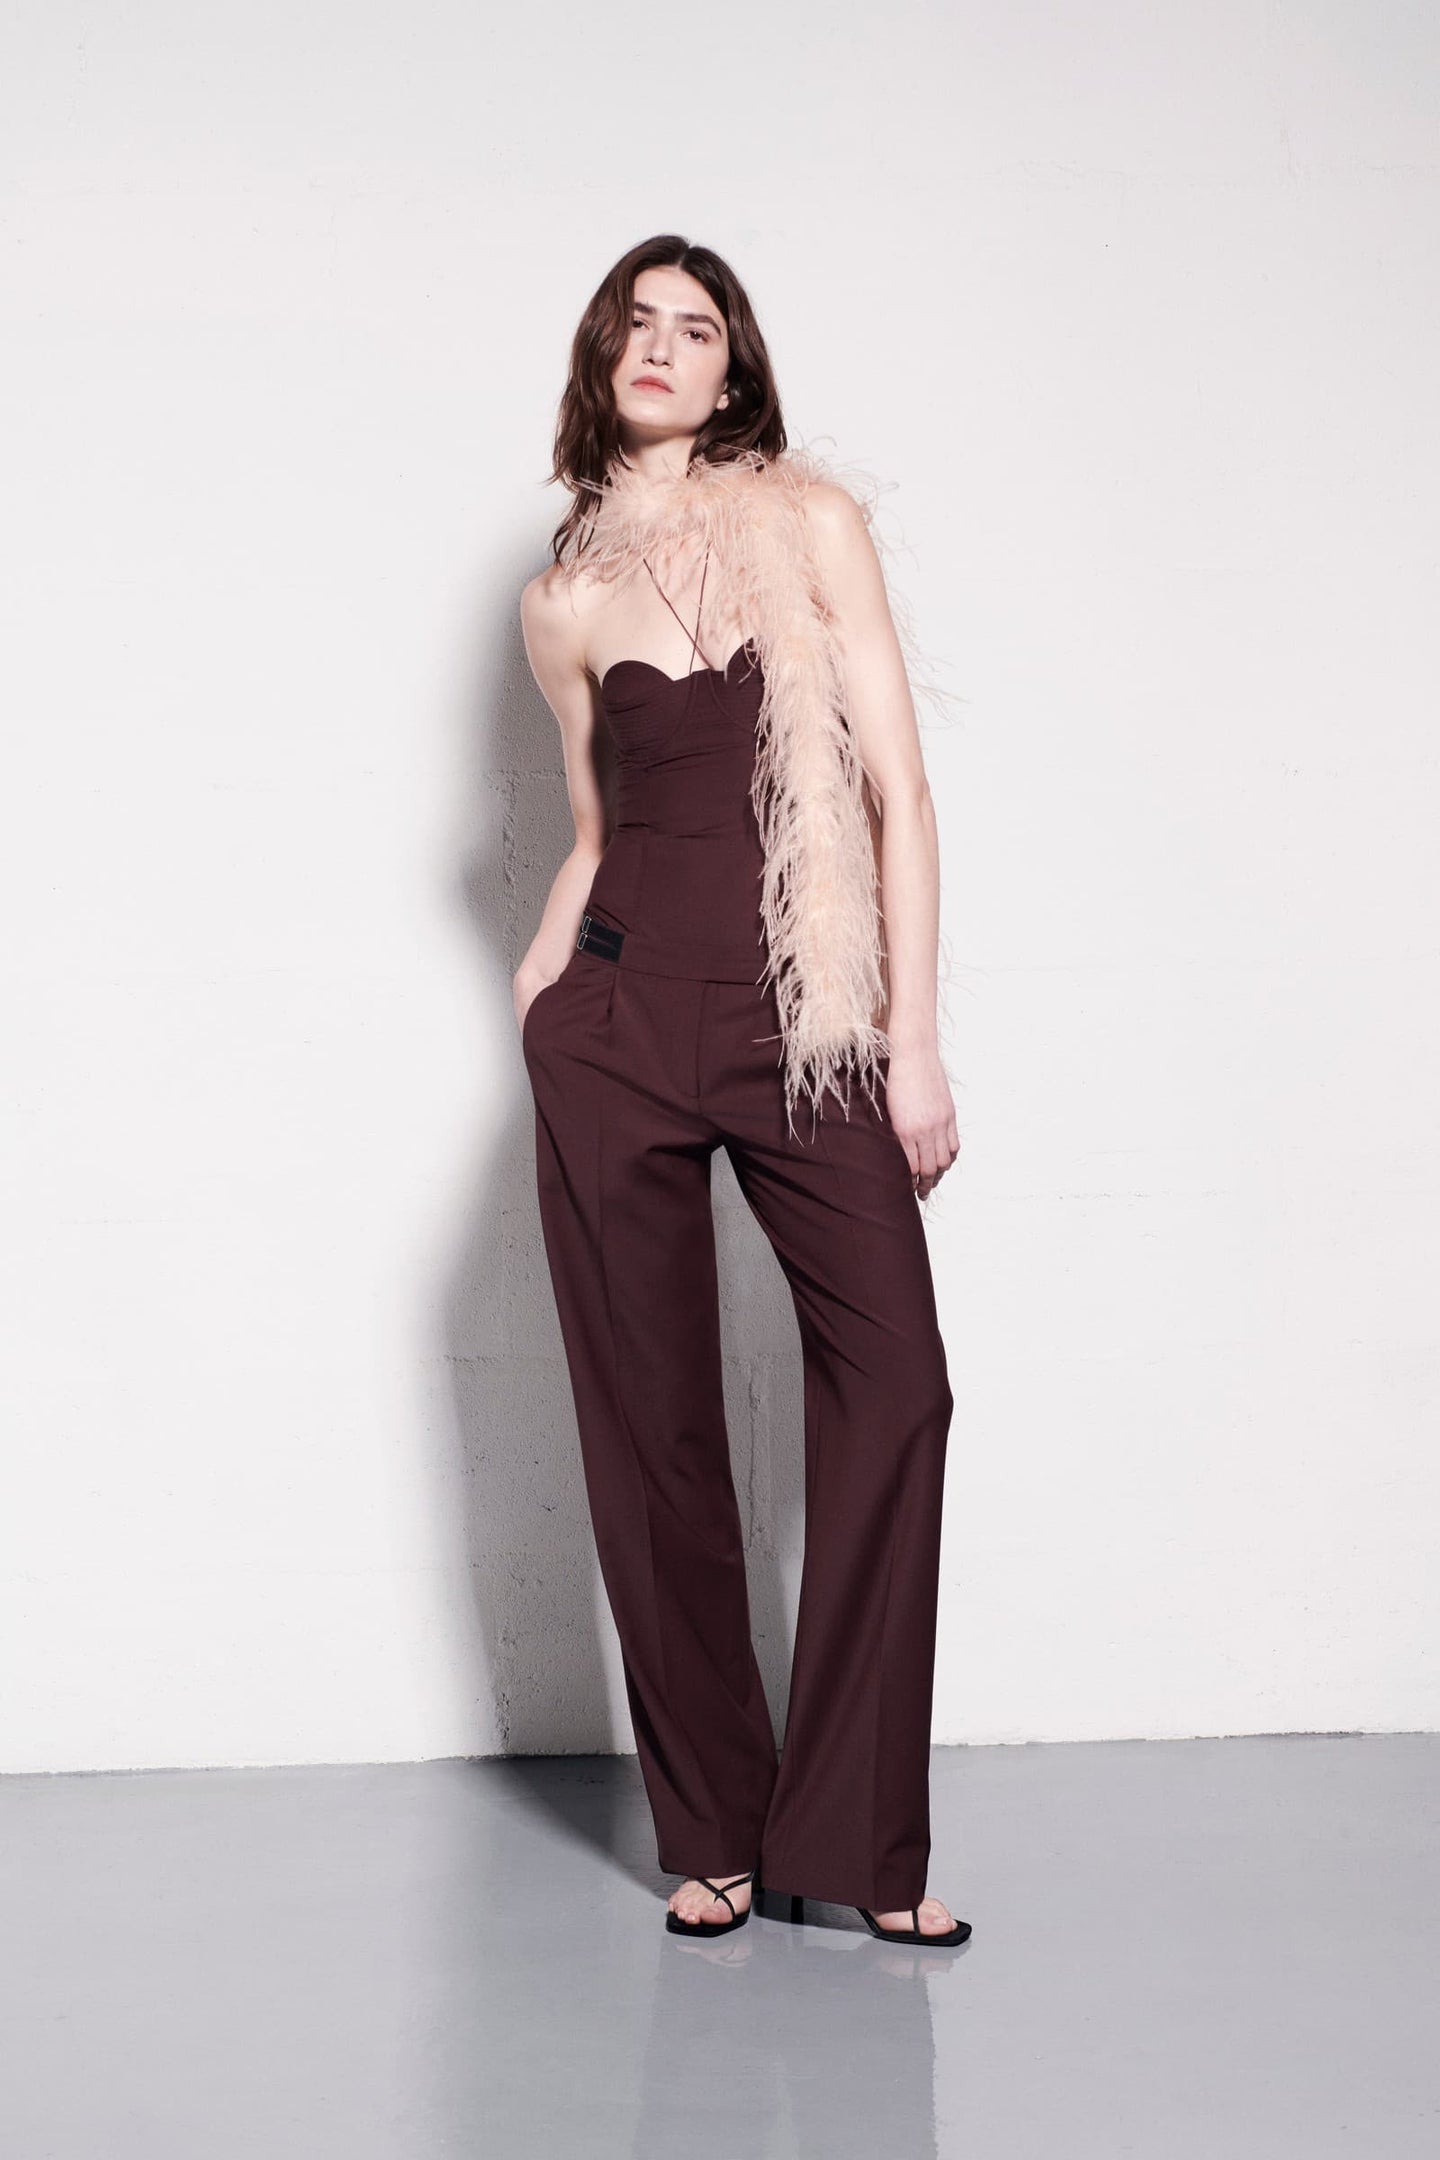 Model in burgundy Nora pants